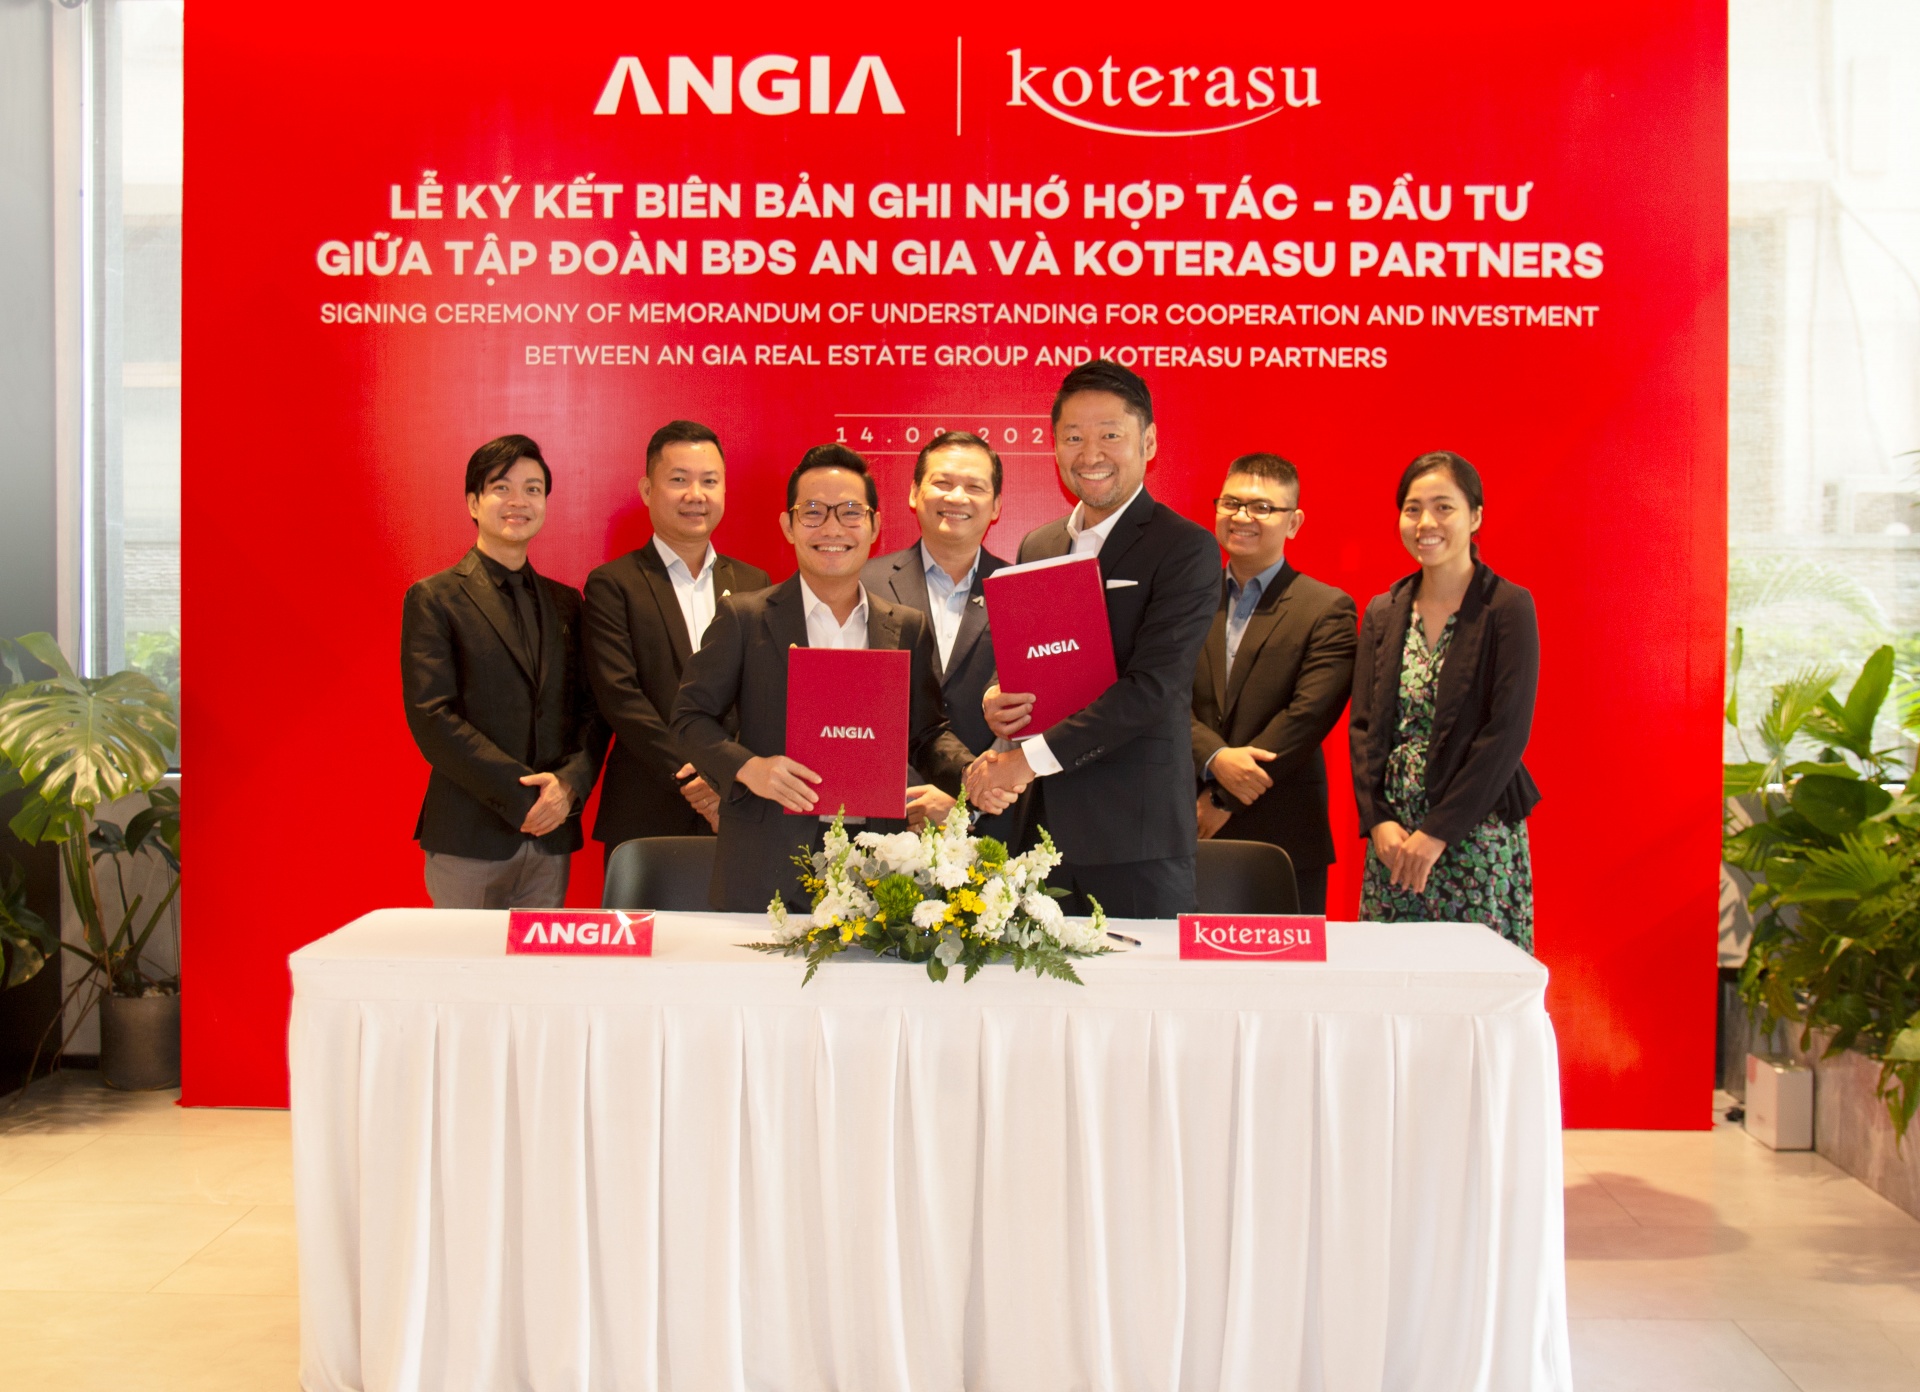 Koterasu reaches $10 million investment agreement with An Gia